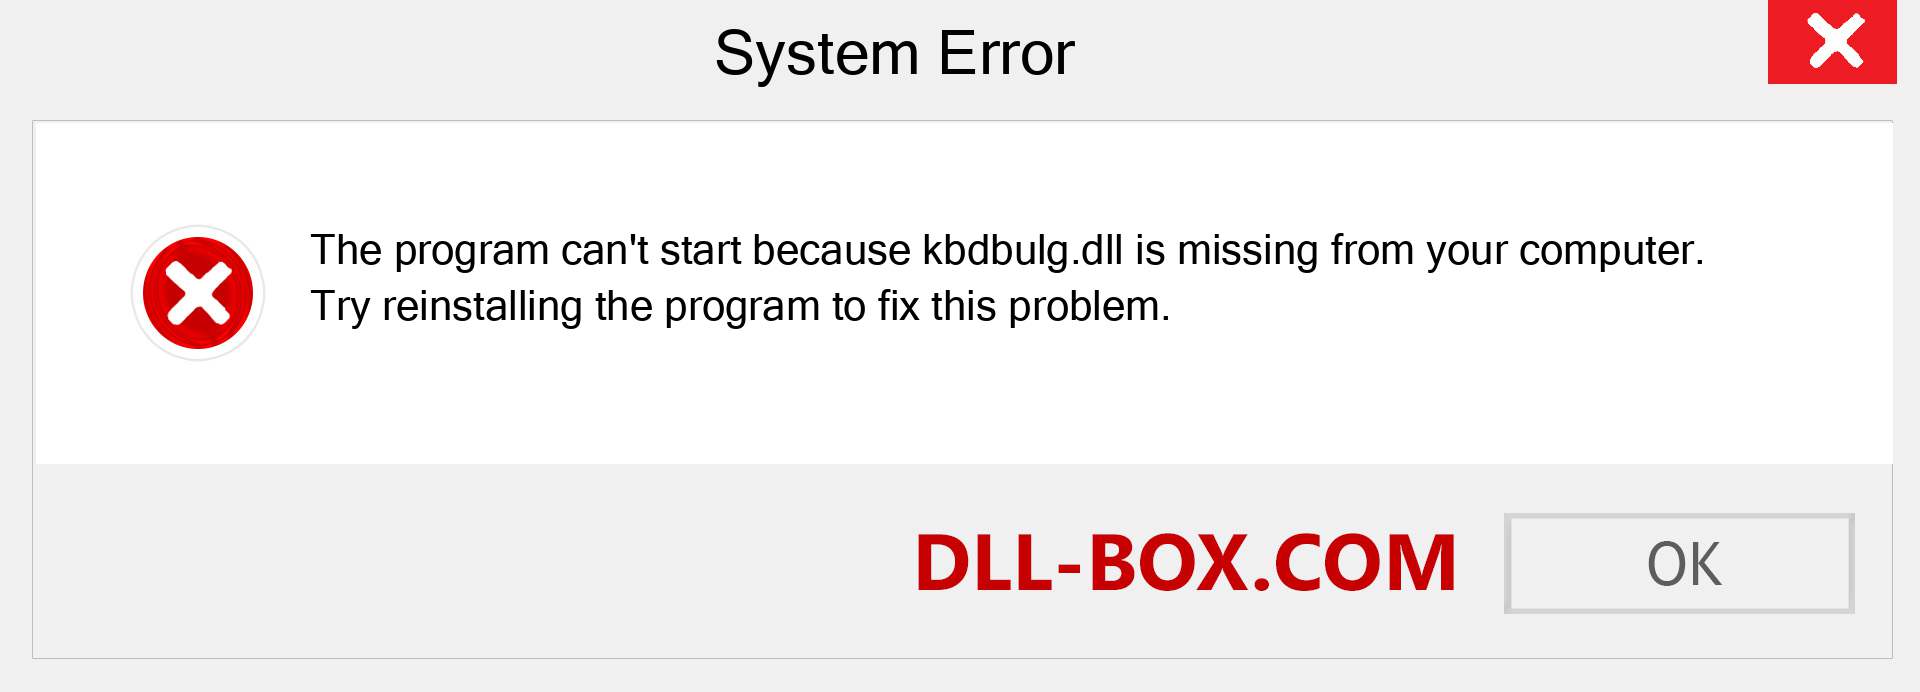  kbdbulg.dll file is missing?. Download for Windows 7, 8, 10 - Fix  kbdbulg dll Missing Error on Windows, photos, images